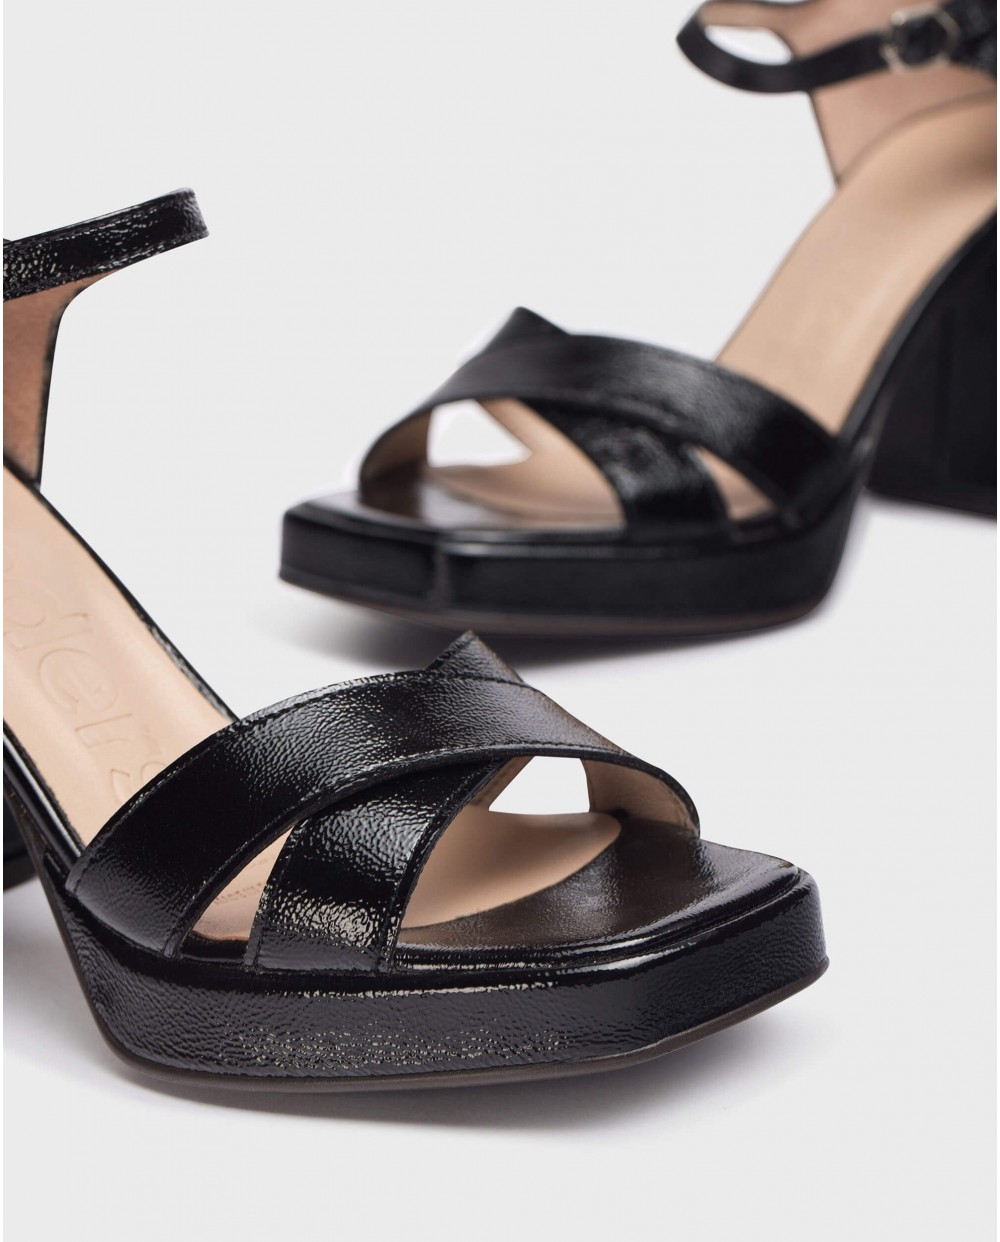 Black Julia sandal